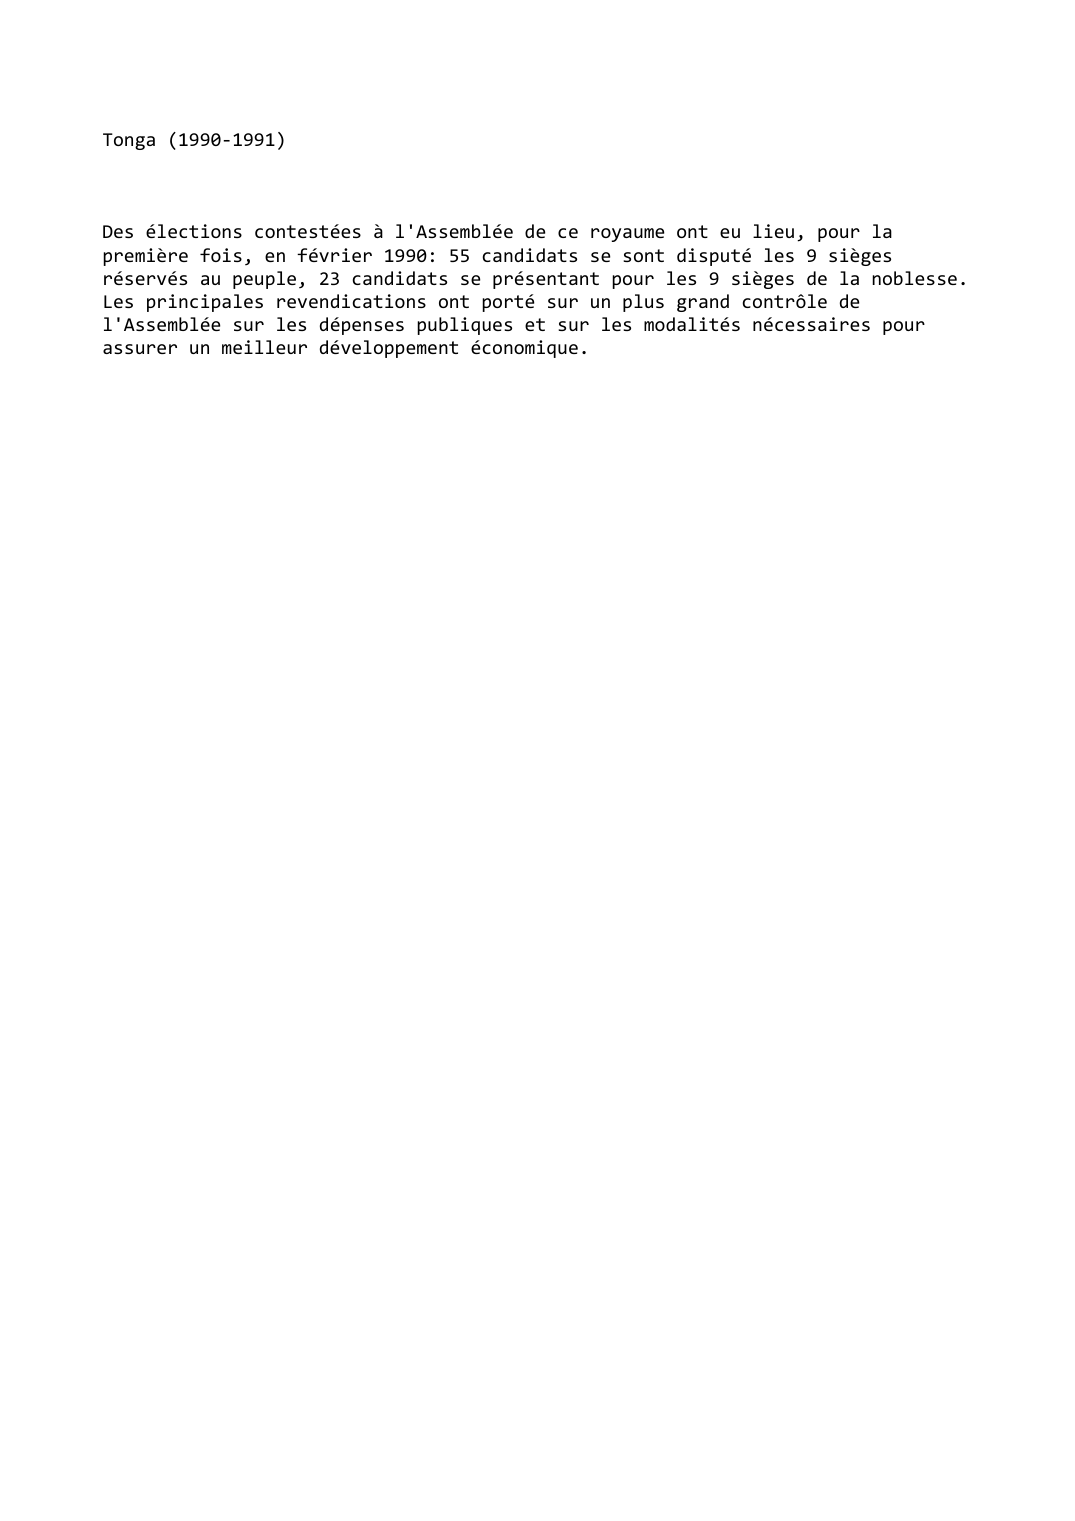 Prévisualisation du document Tonga (1990-1991)